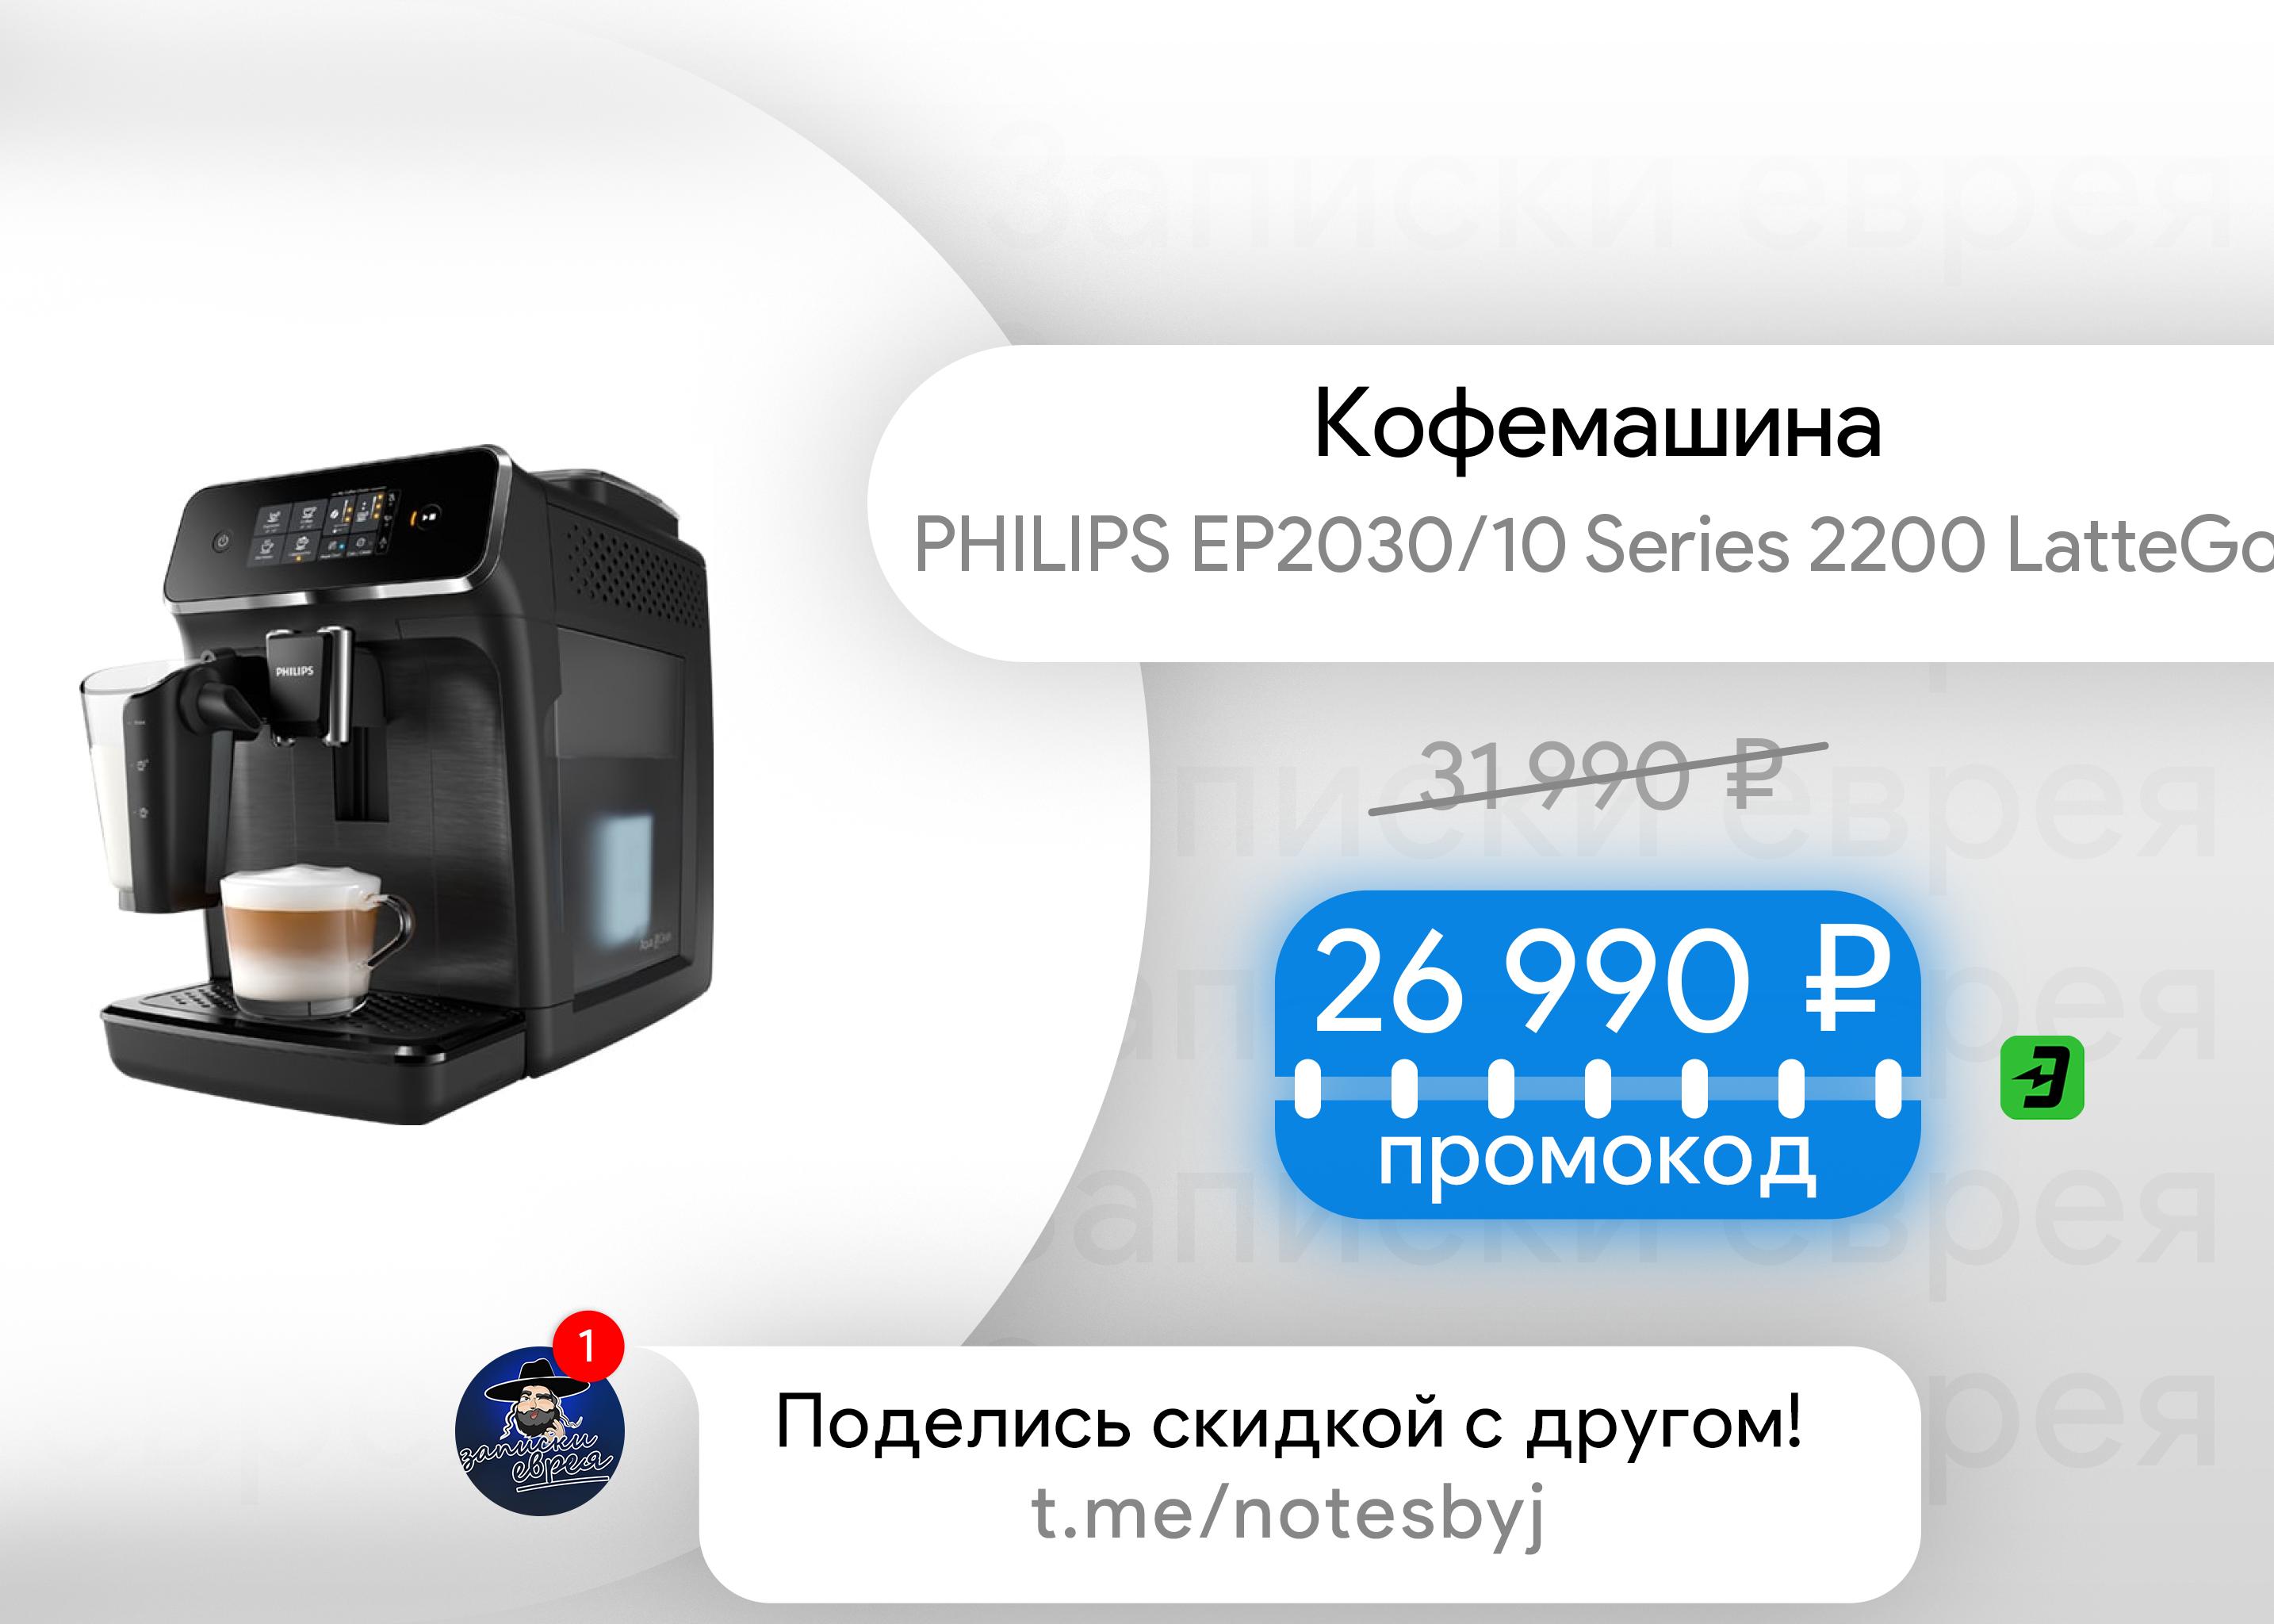 Ep2030 series 2200